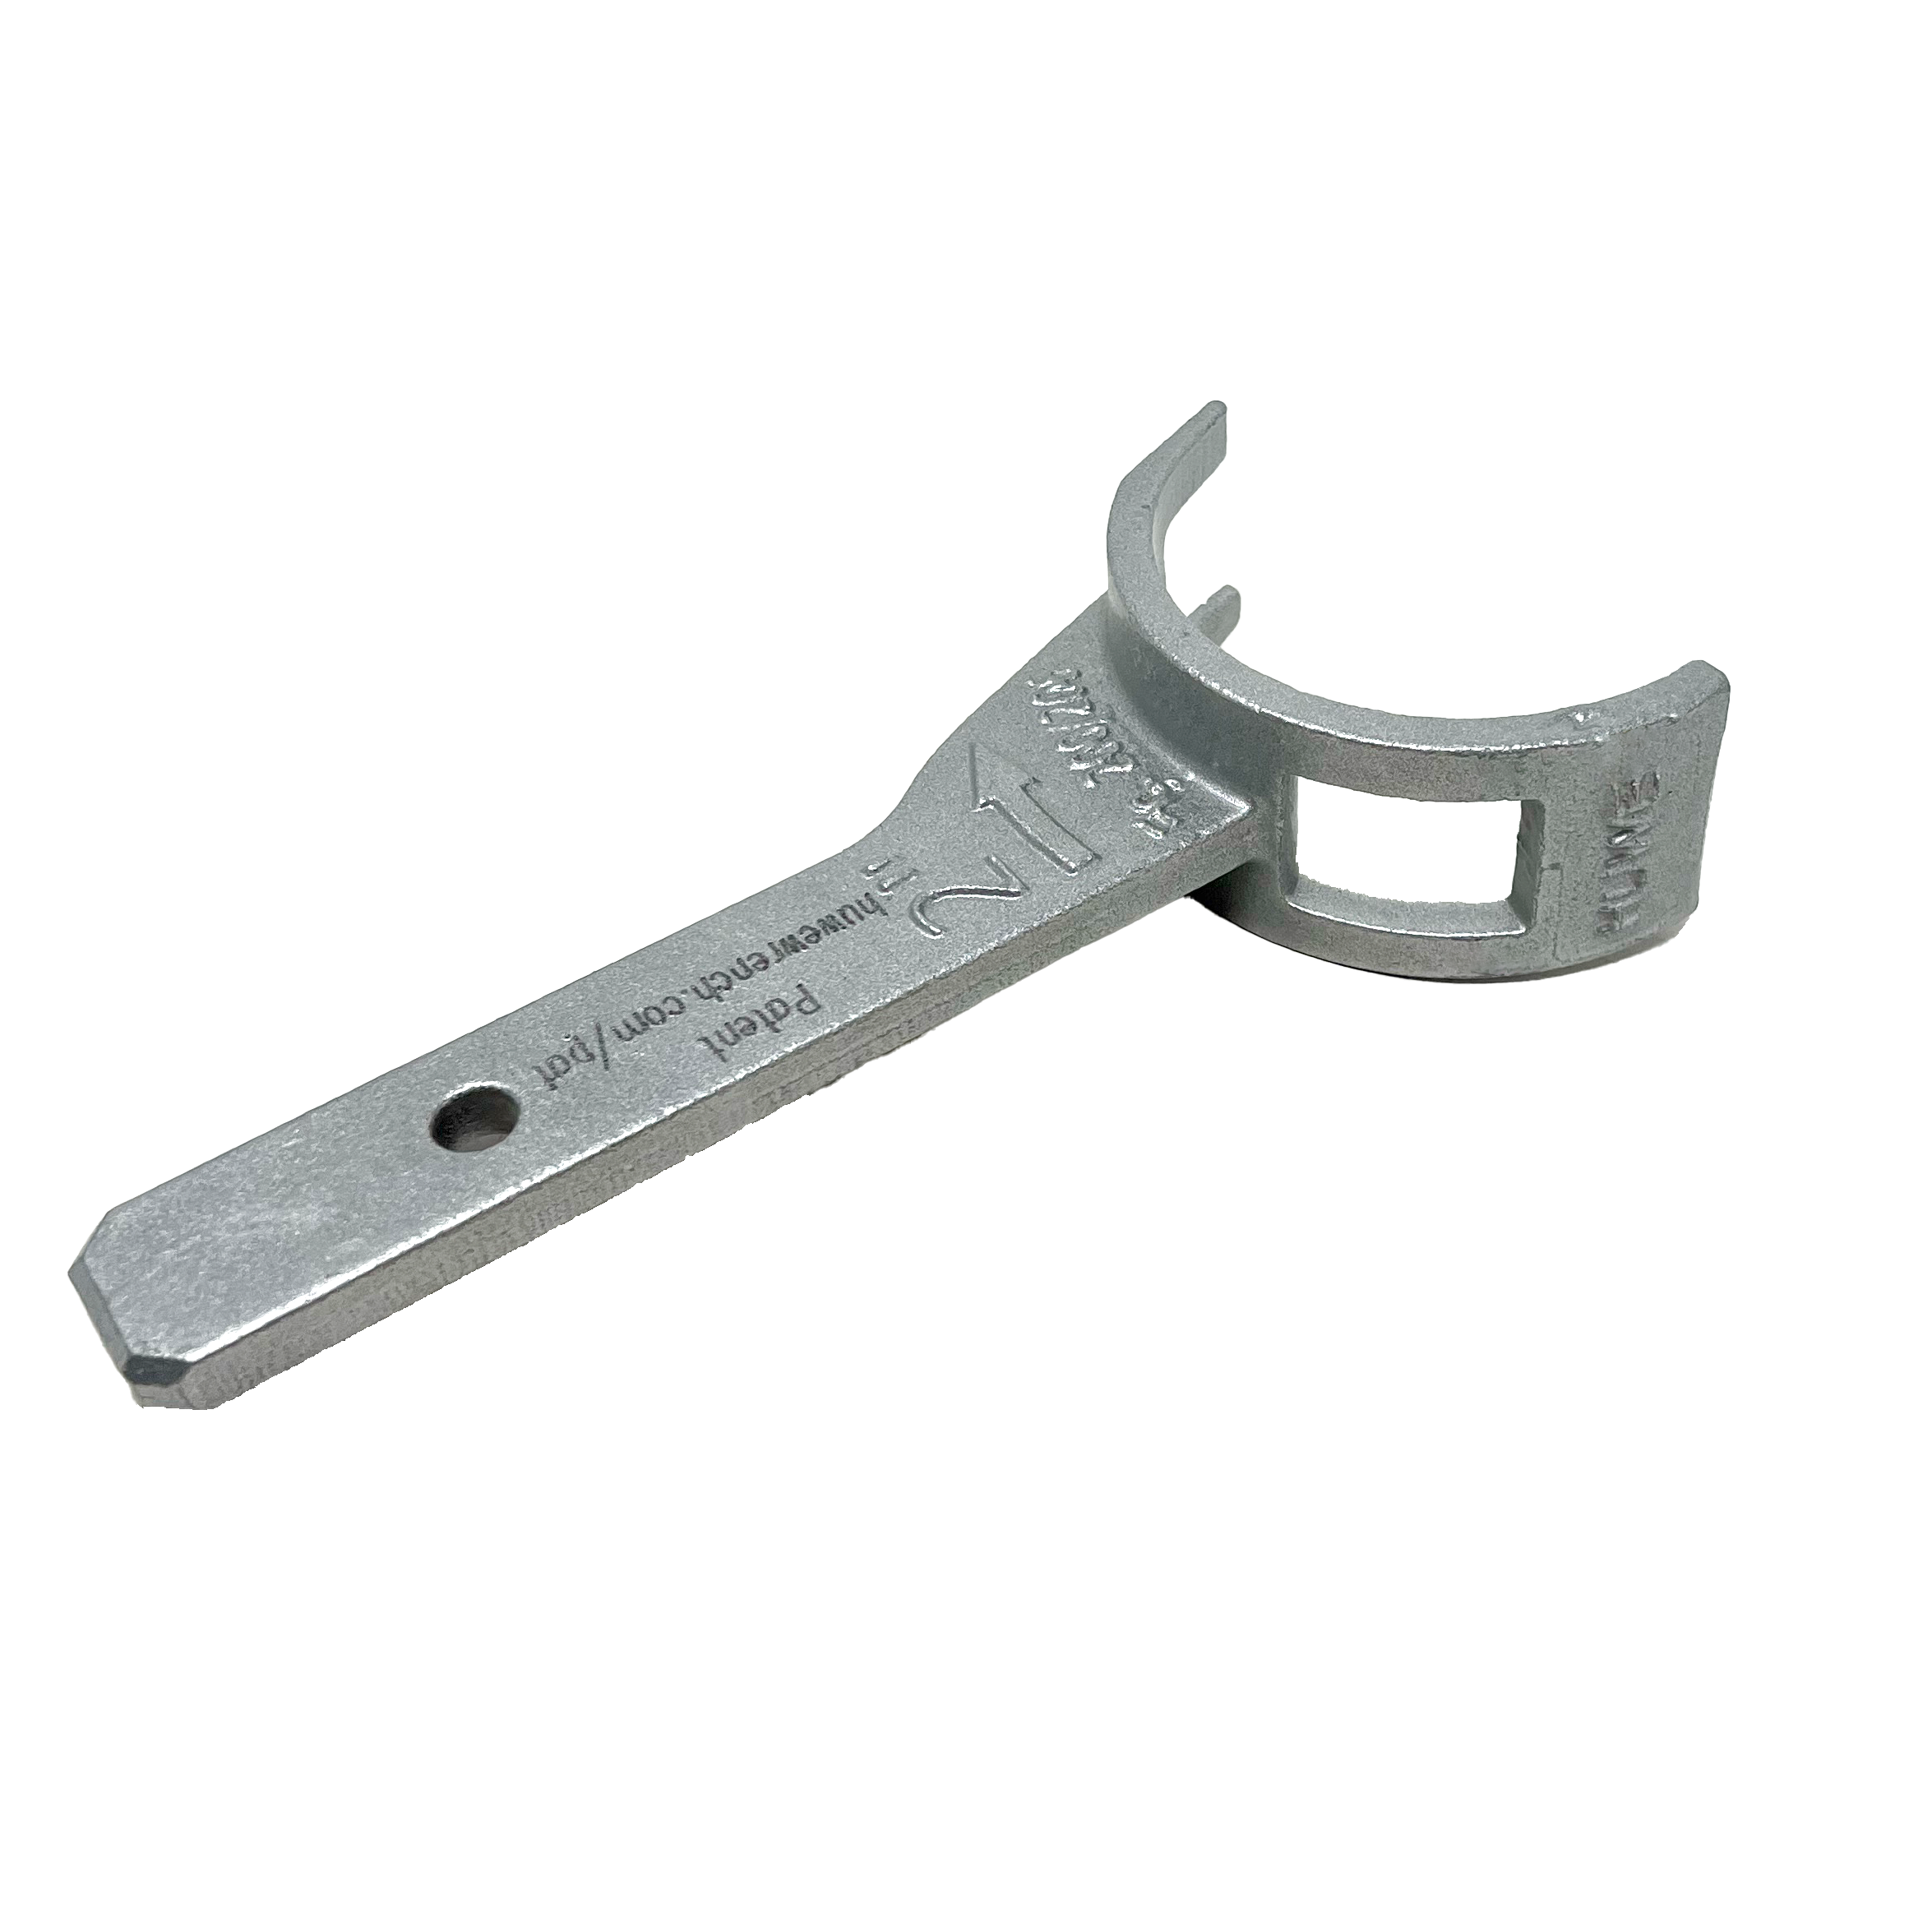 710-0019 HUWE Wrench Head for 2" Figure 100, Figure 200, Figure 206, Figure 400